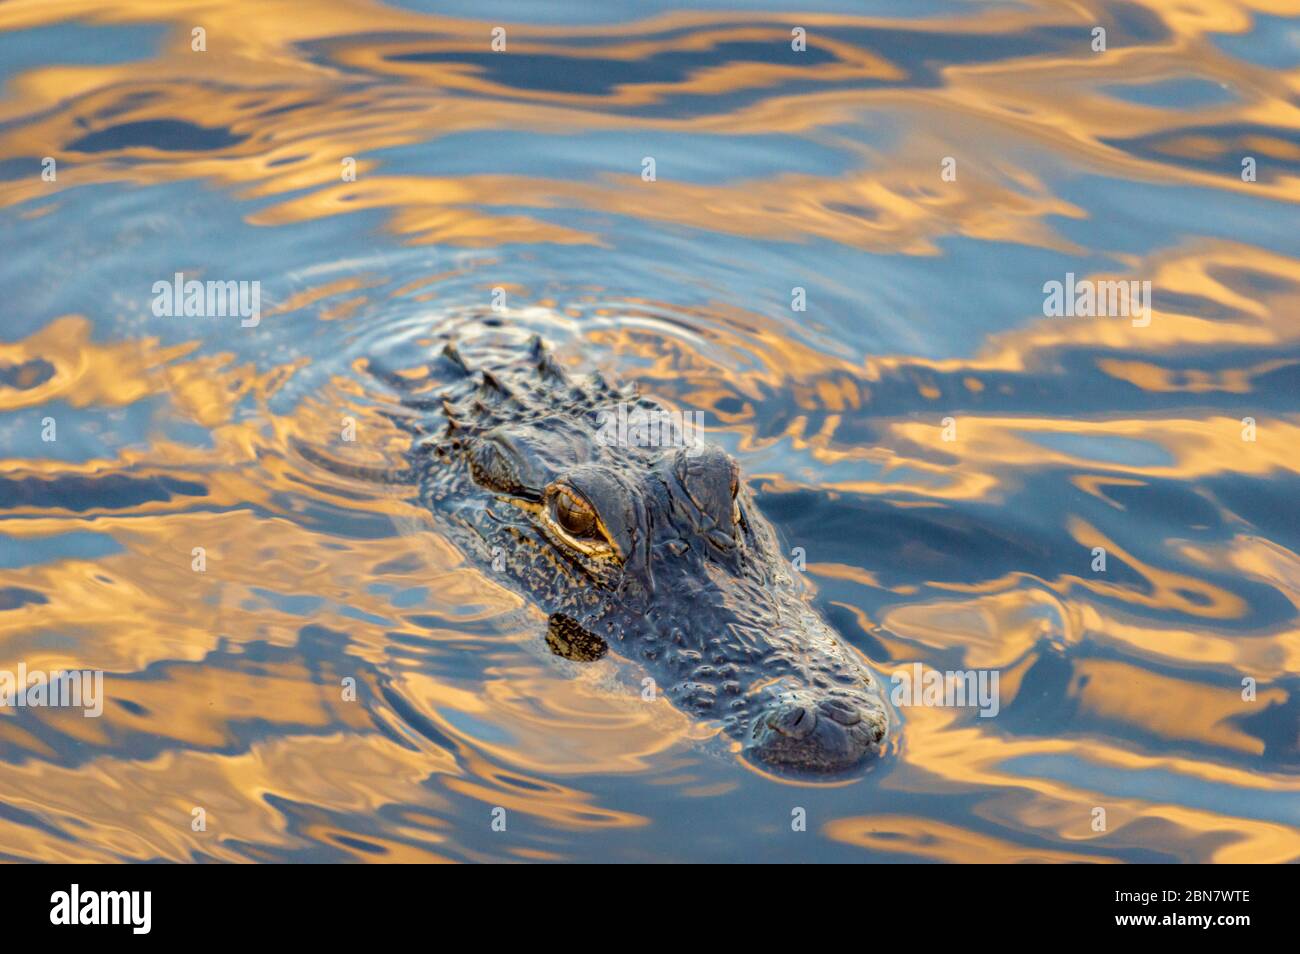 Crocodiles in Orlando Florida, USA Stock Photo